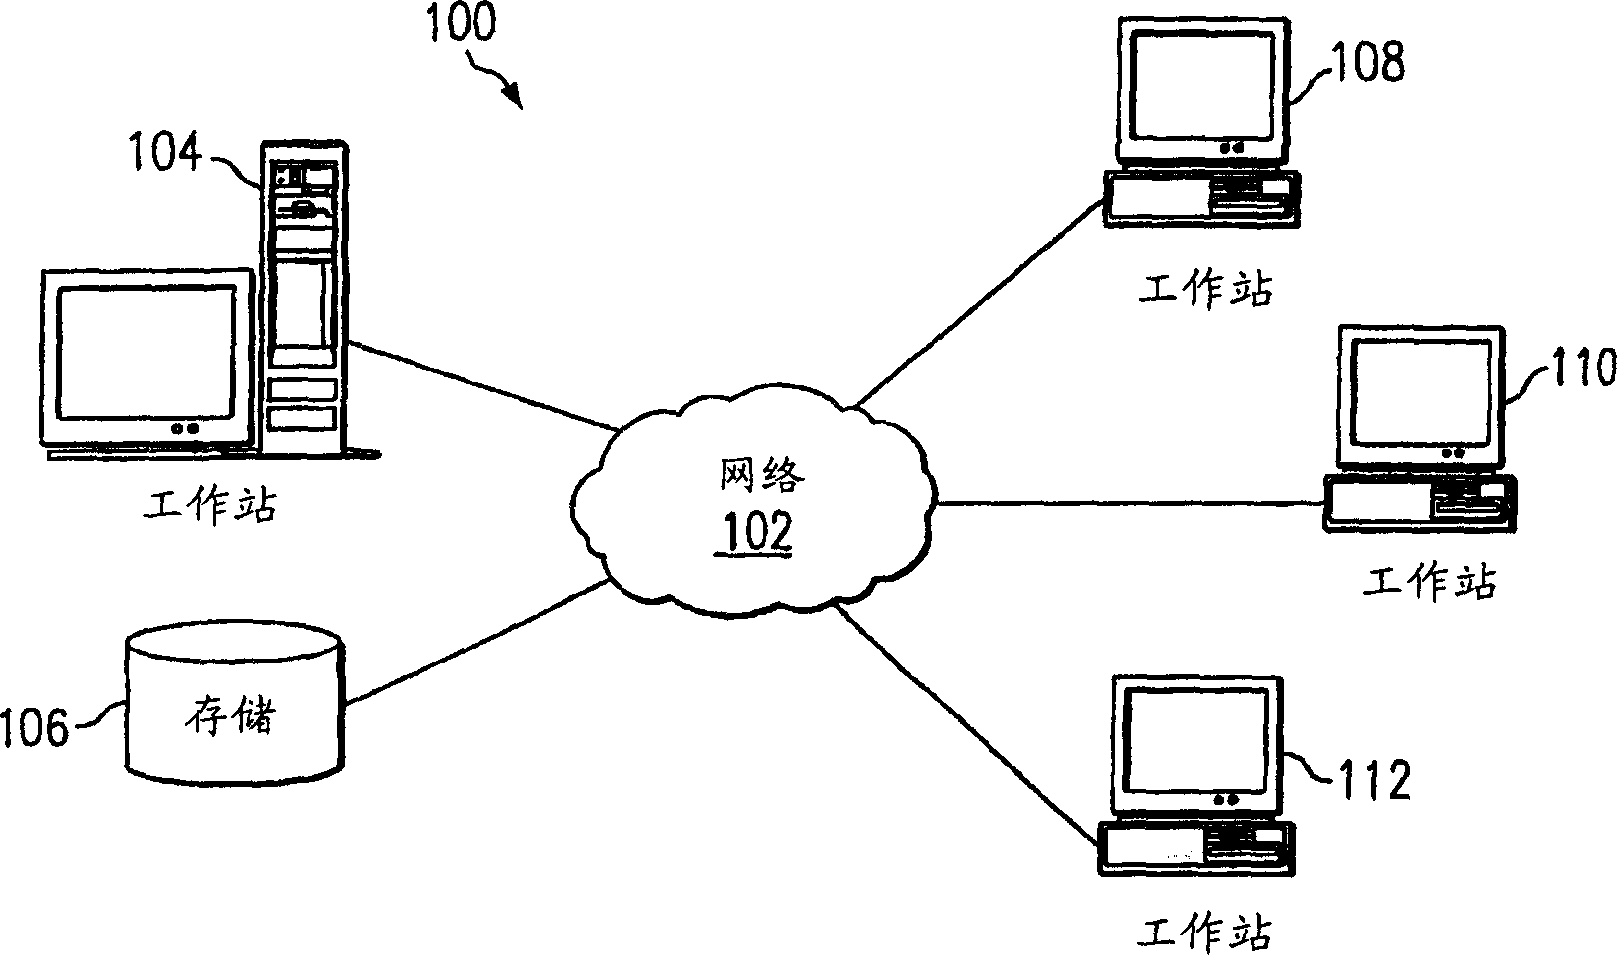 Method and apparatus for segmented peer-to-peer computing